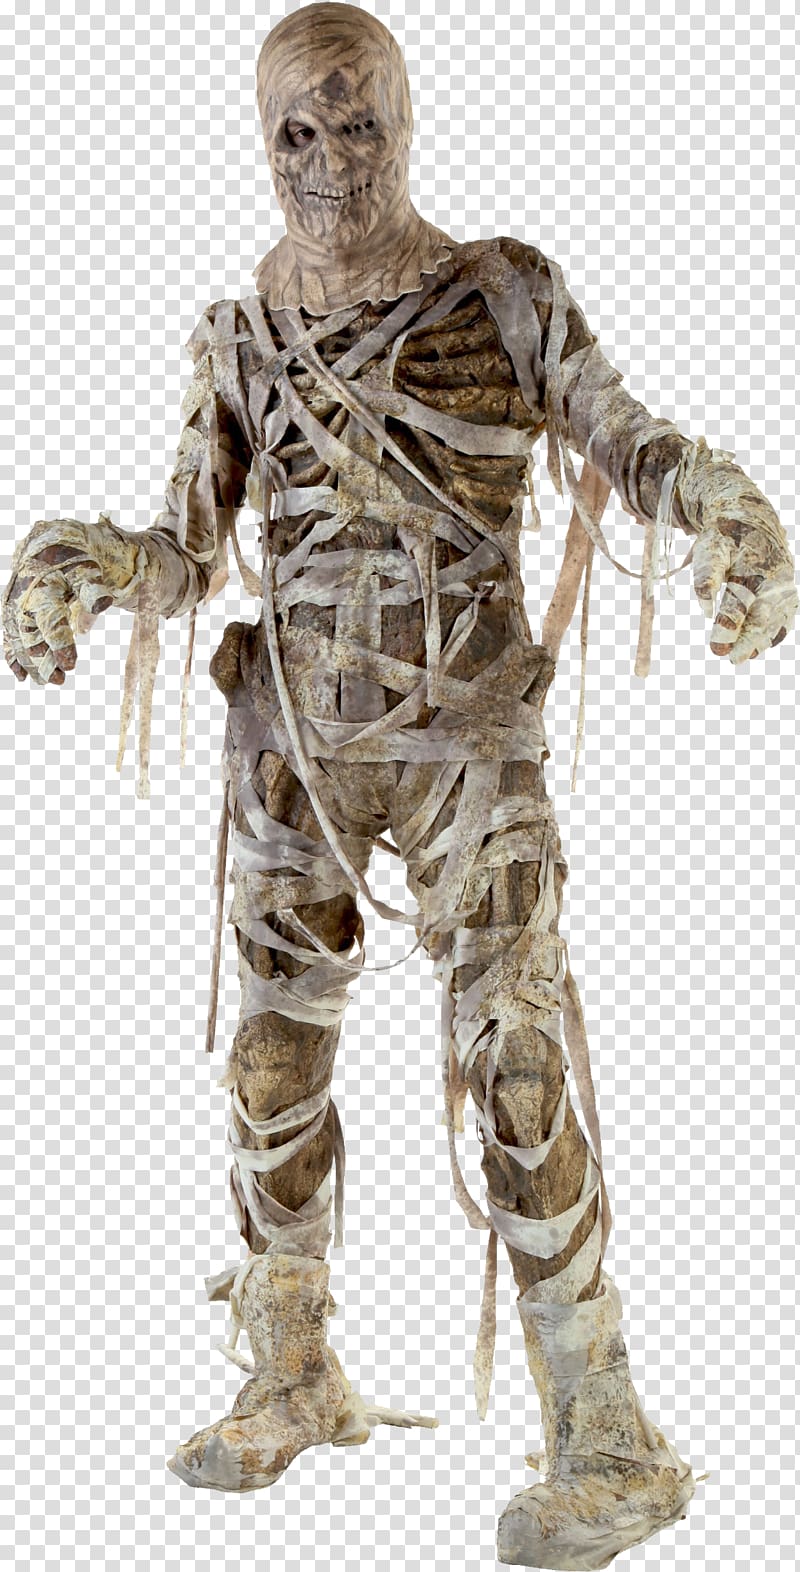 Mummy transparent background PNG clipart